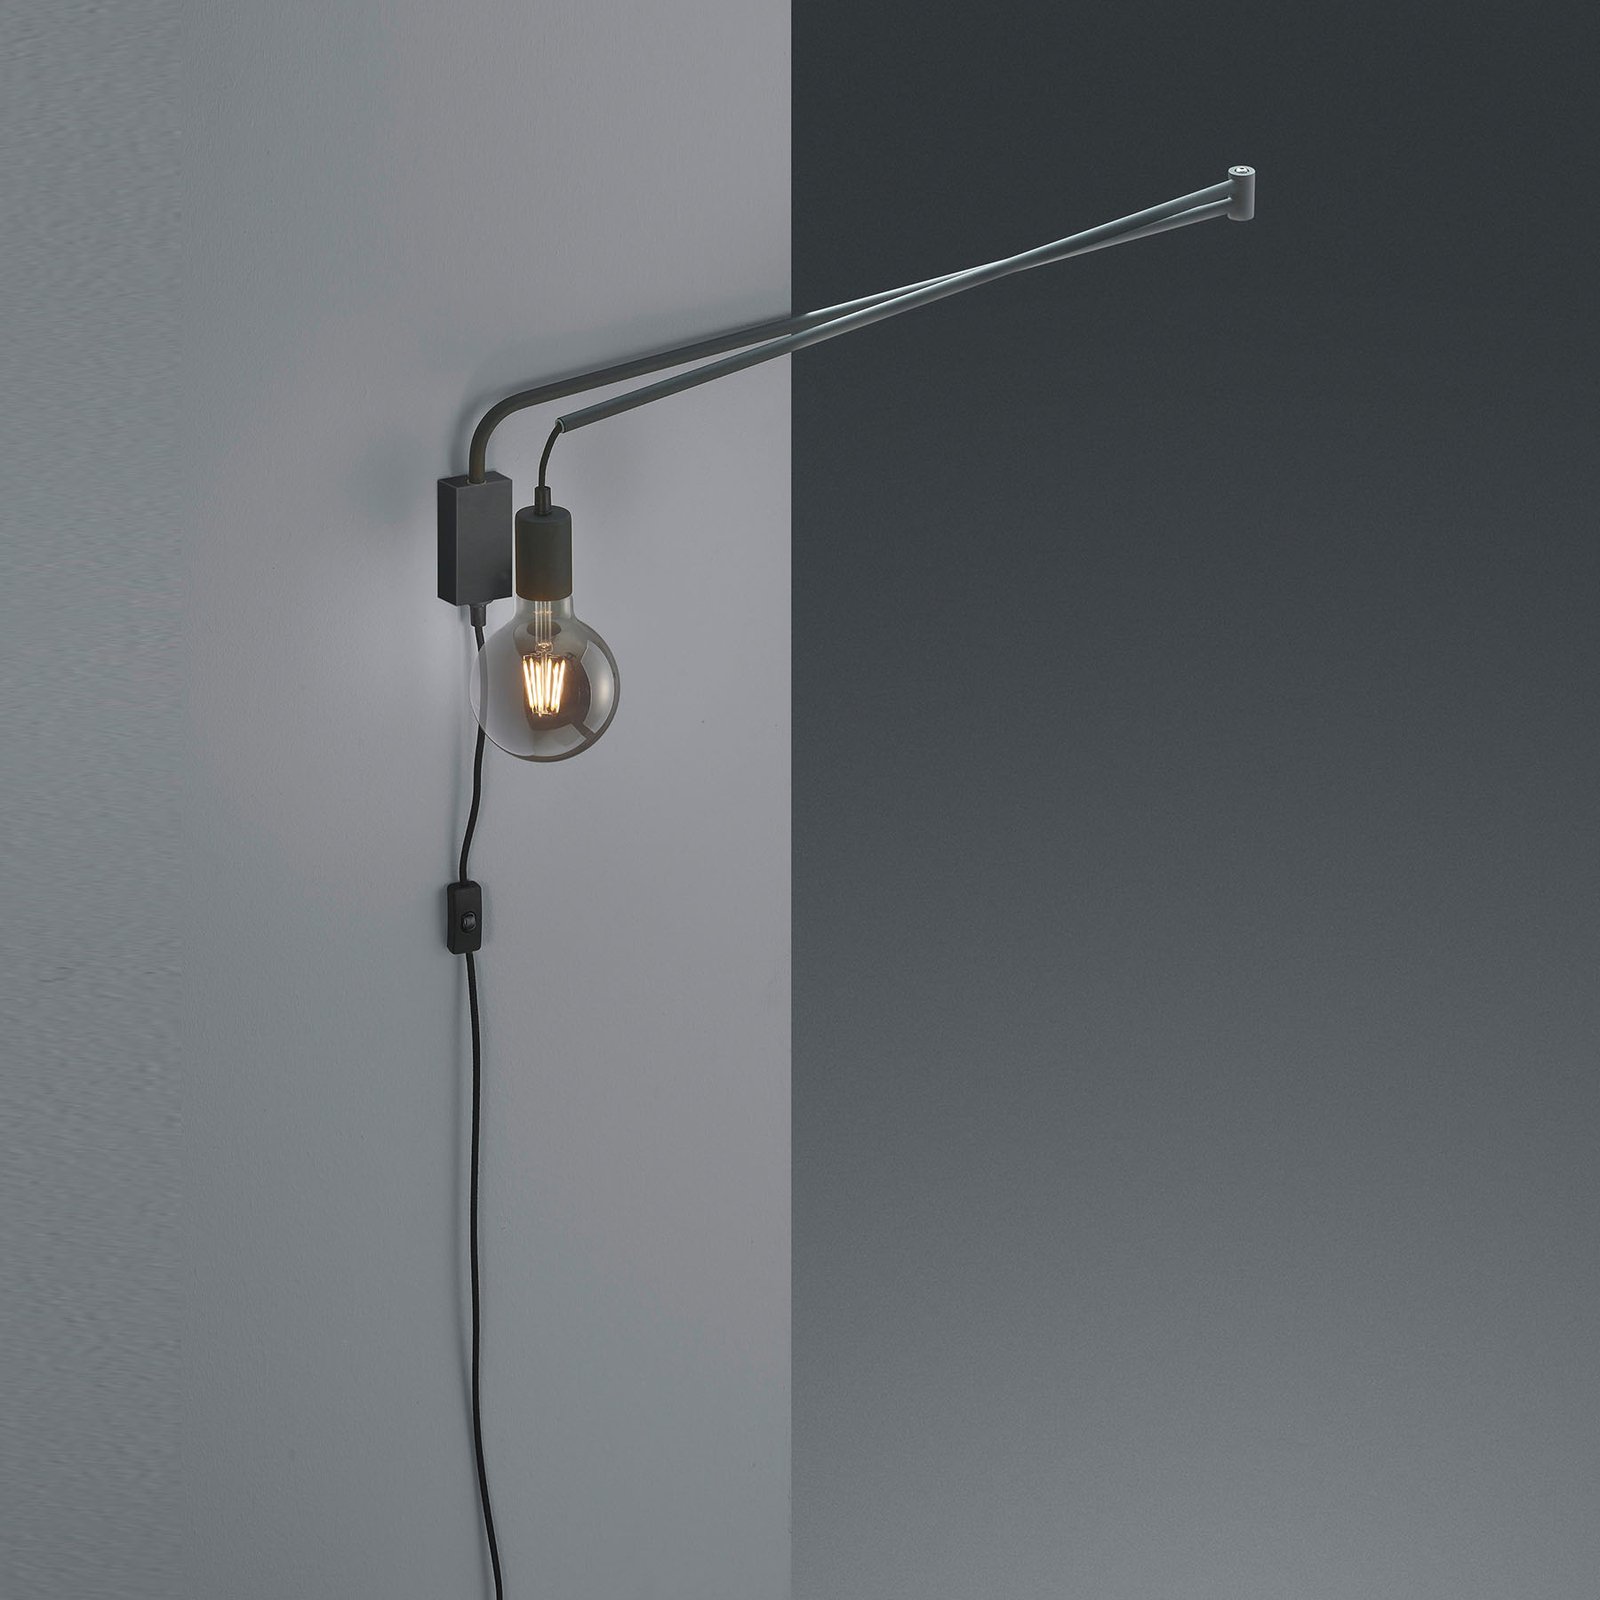 Wandlamp Line met kabel + stekker, zwart